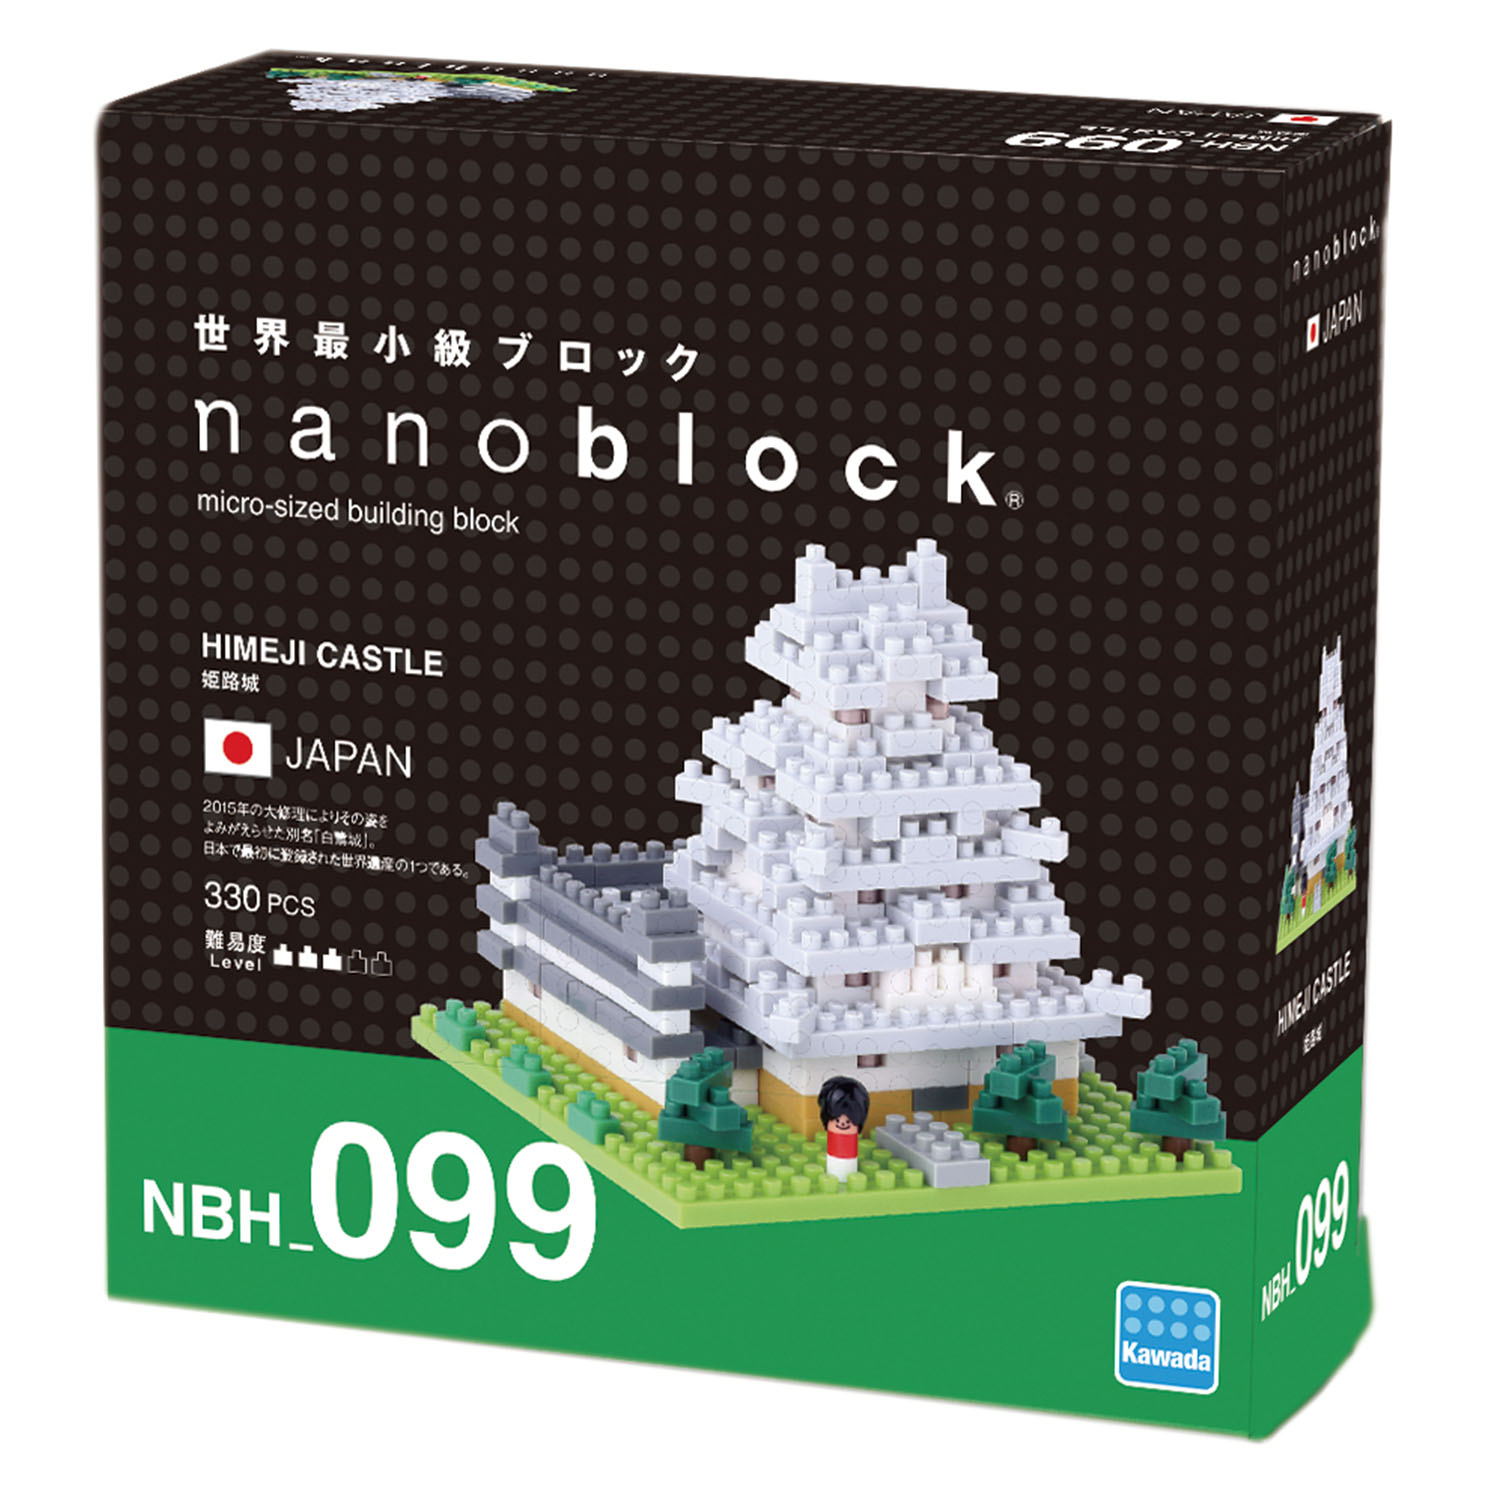 nanoblock Himeji Castle aufgebaut